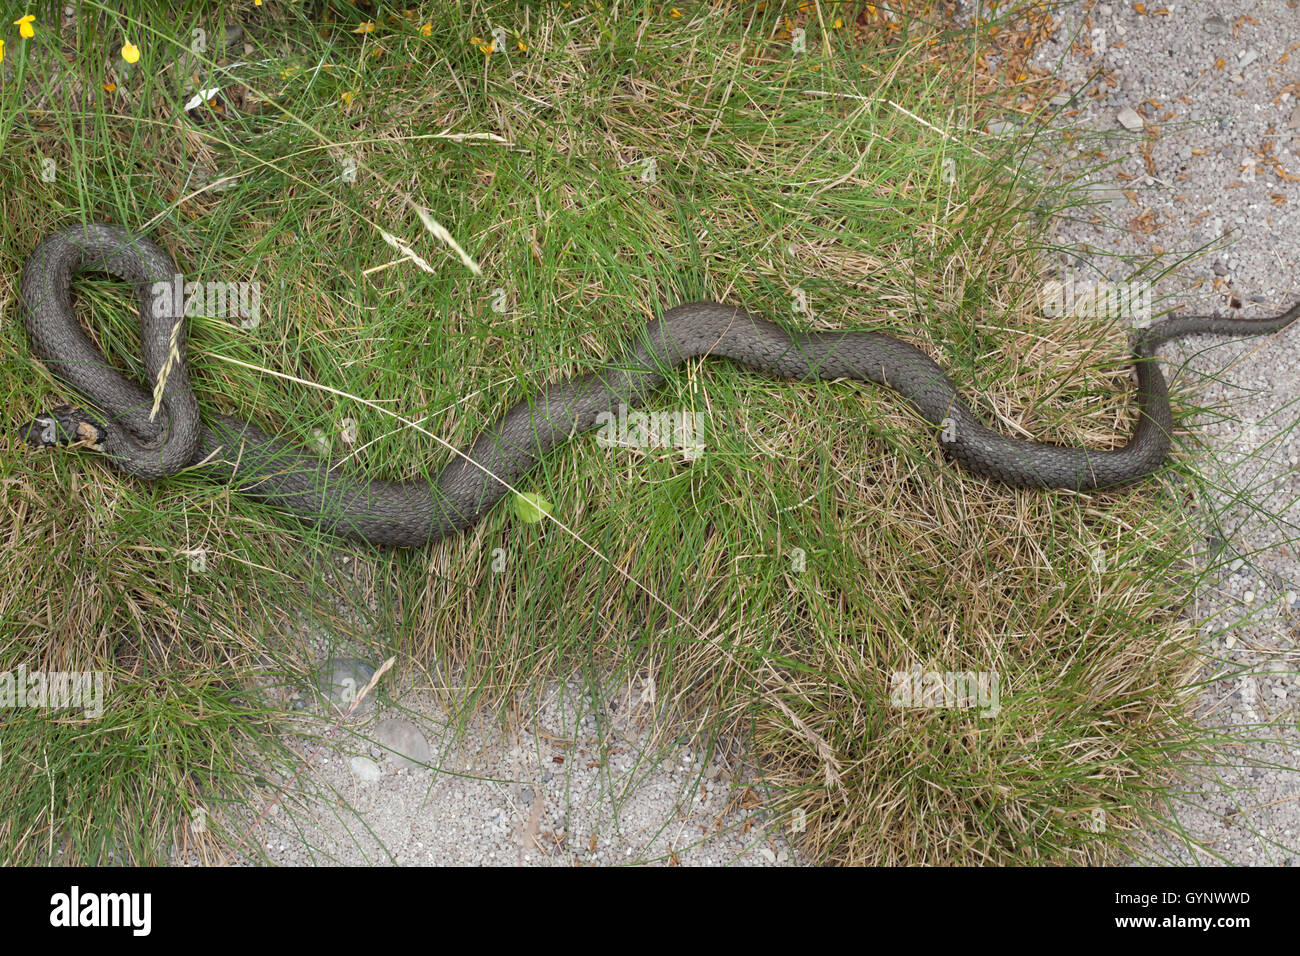 Grass snake (Natrix natrix), also known as the water snake. Wildlife animal. Stock Photo